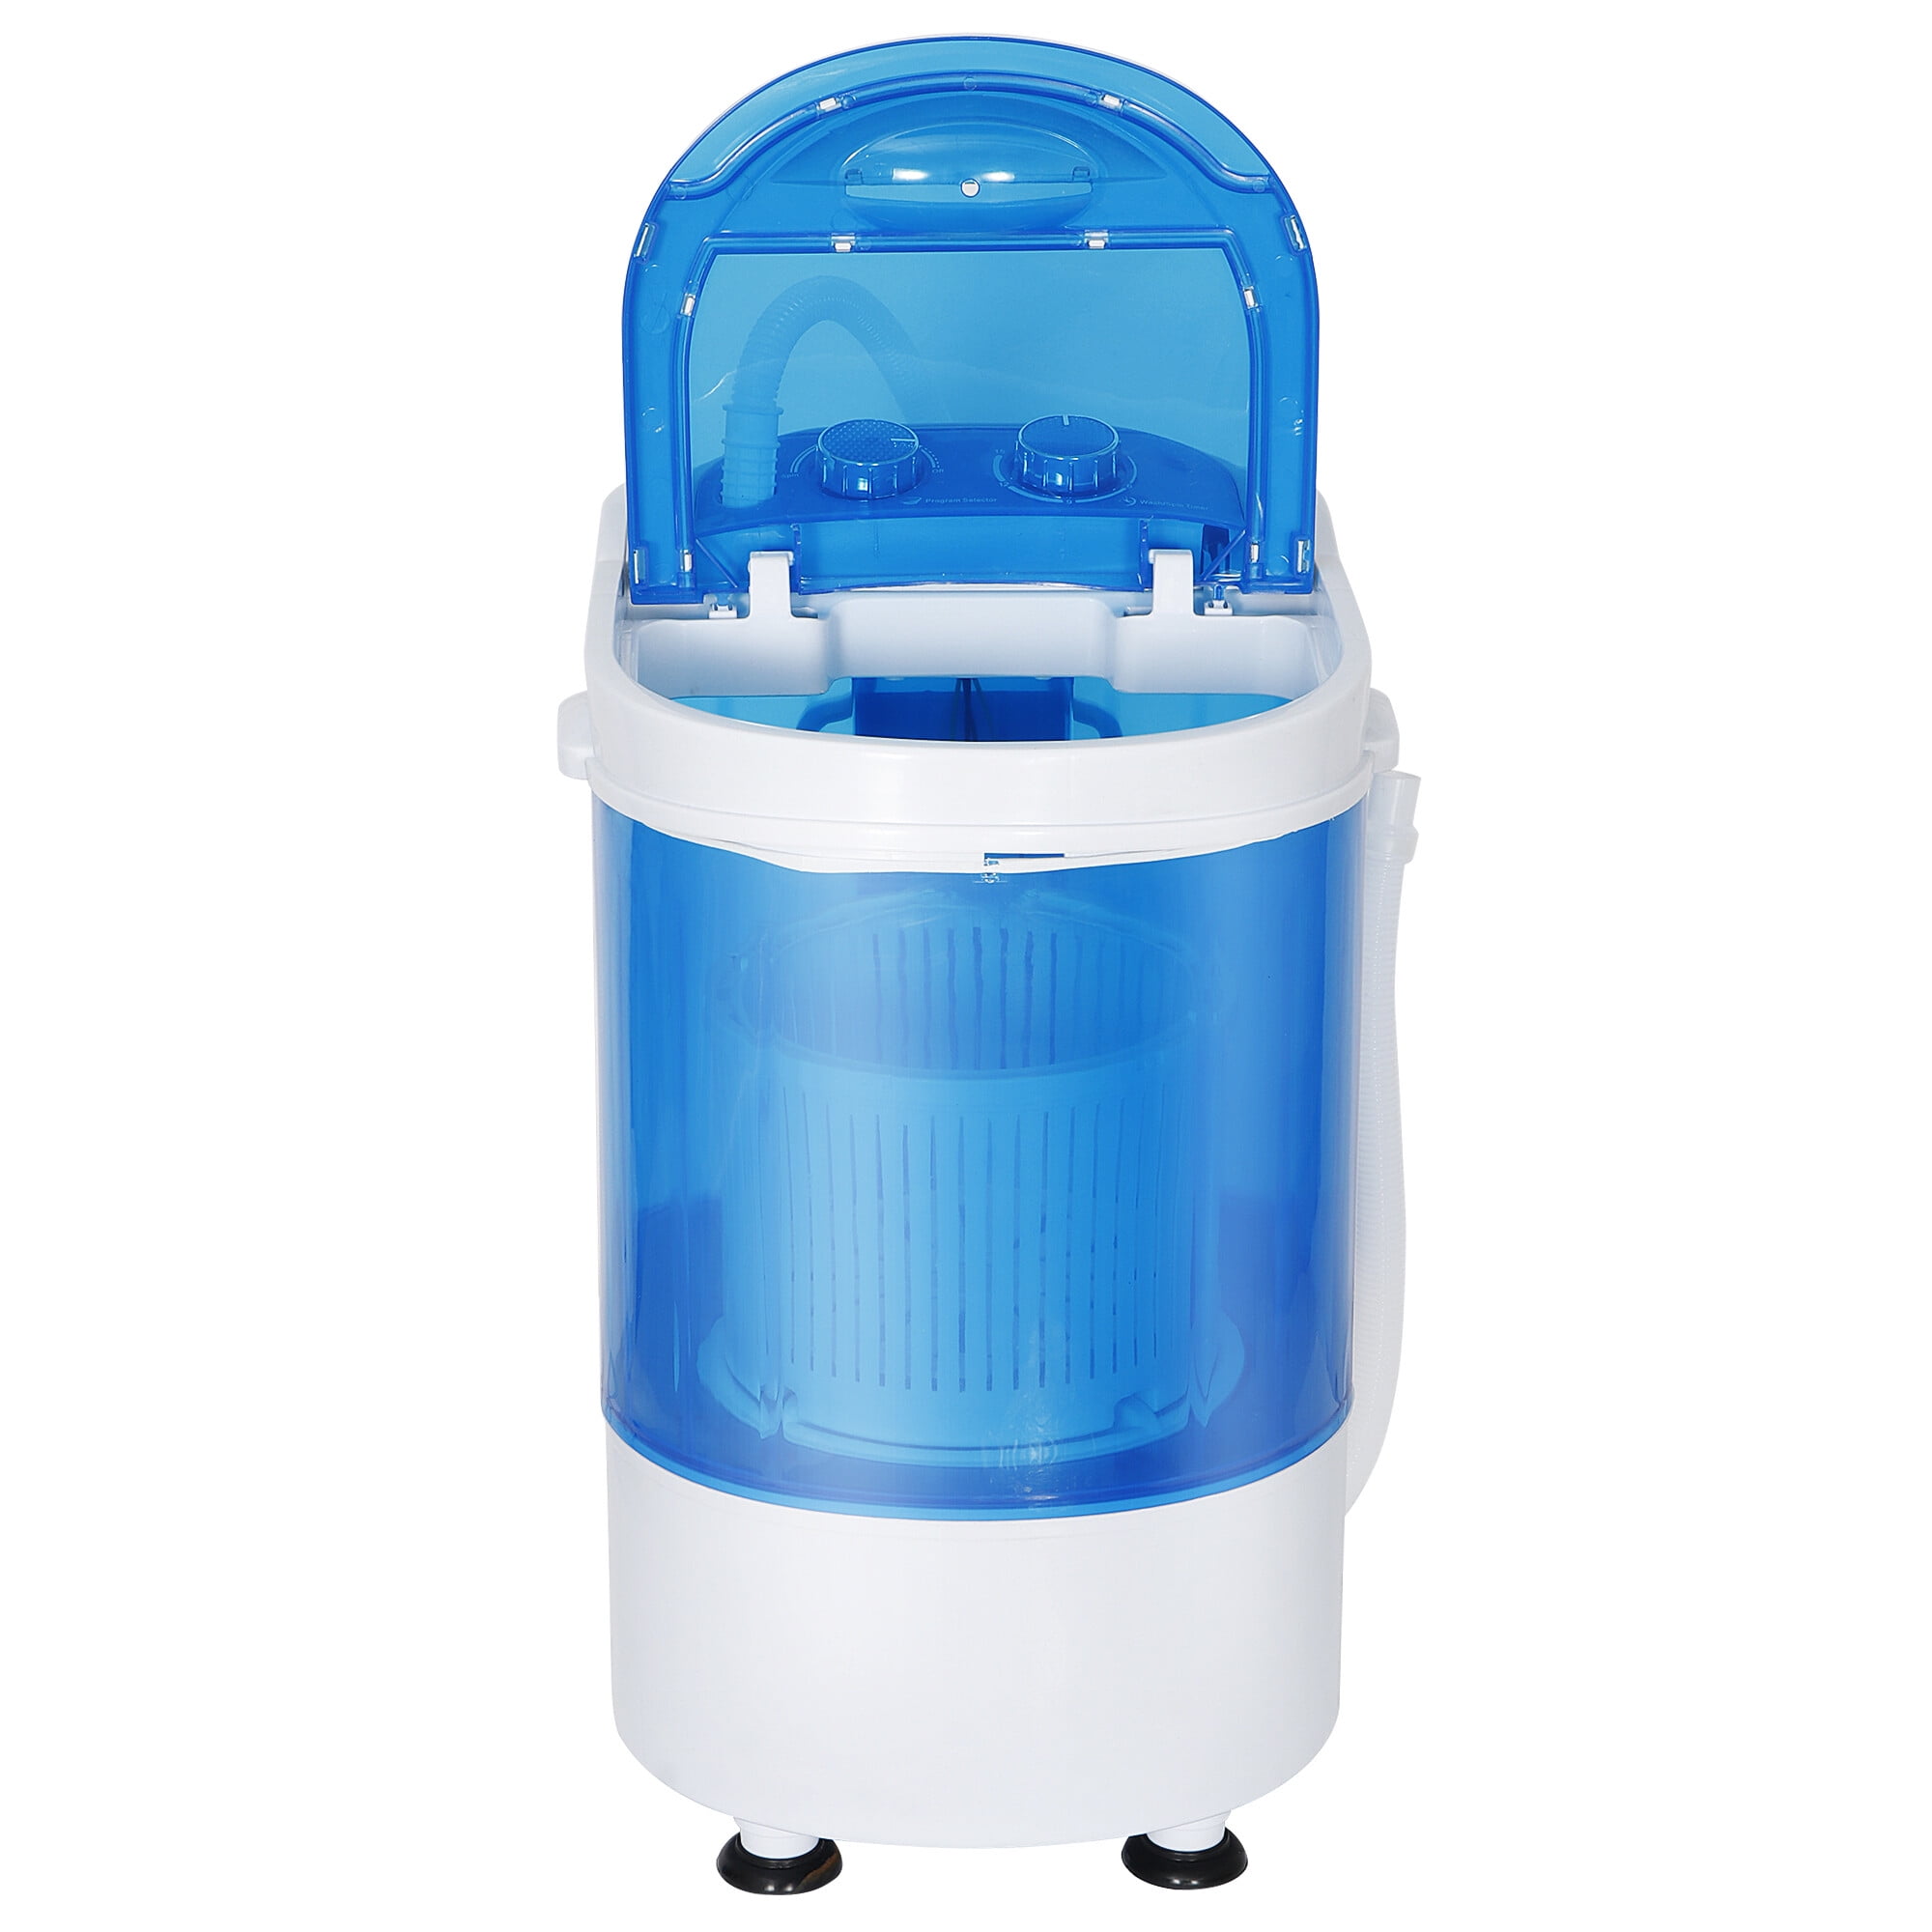 ZENSTYLE 6lbs Capacity Mini Washing Machine Compact Counter Top